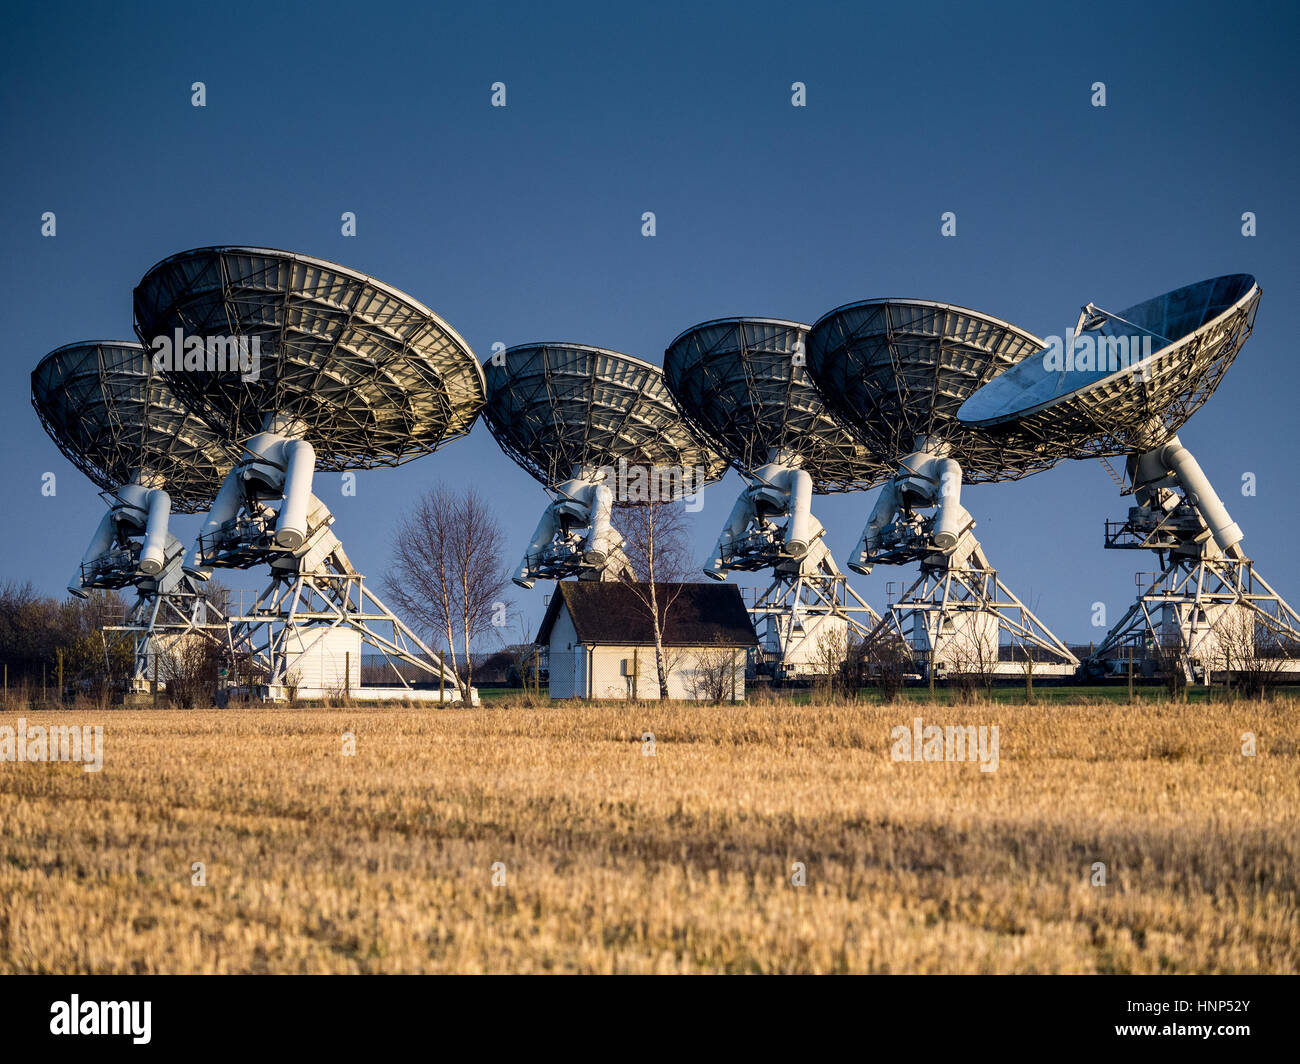 Several radio telescopes, part of the Mullard Radio Astronomy Observatory  Arcminute Microkelvin Imager Large Array nr Cambridge Stock Photo - Alamy